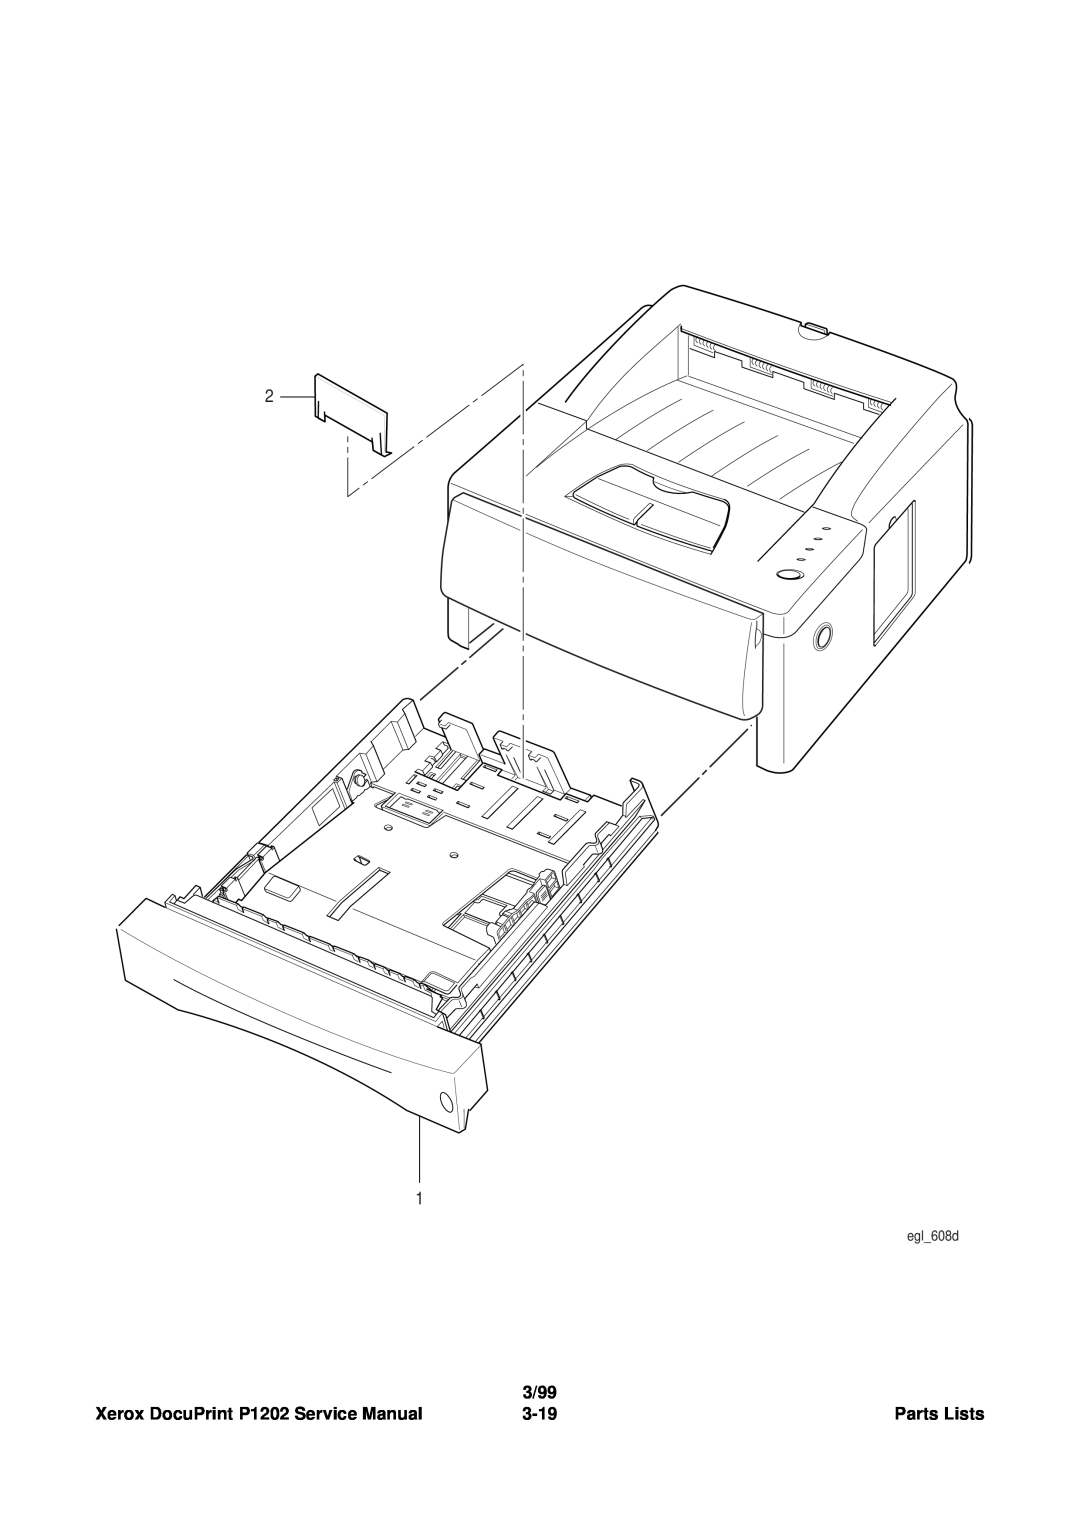 Xerox service manual 3/99, Xerox DocuPrint P1202 Service Manual, 3-19, Parts Lists, eglegl608d608c 